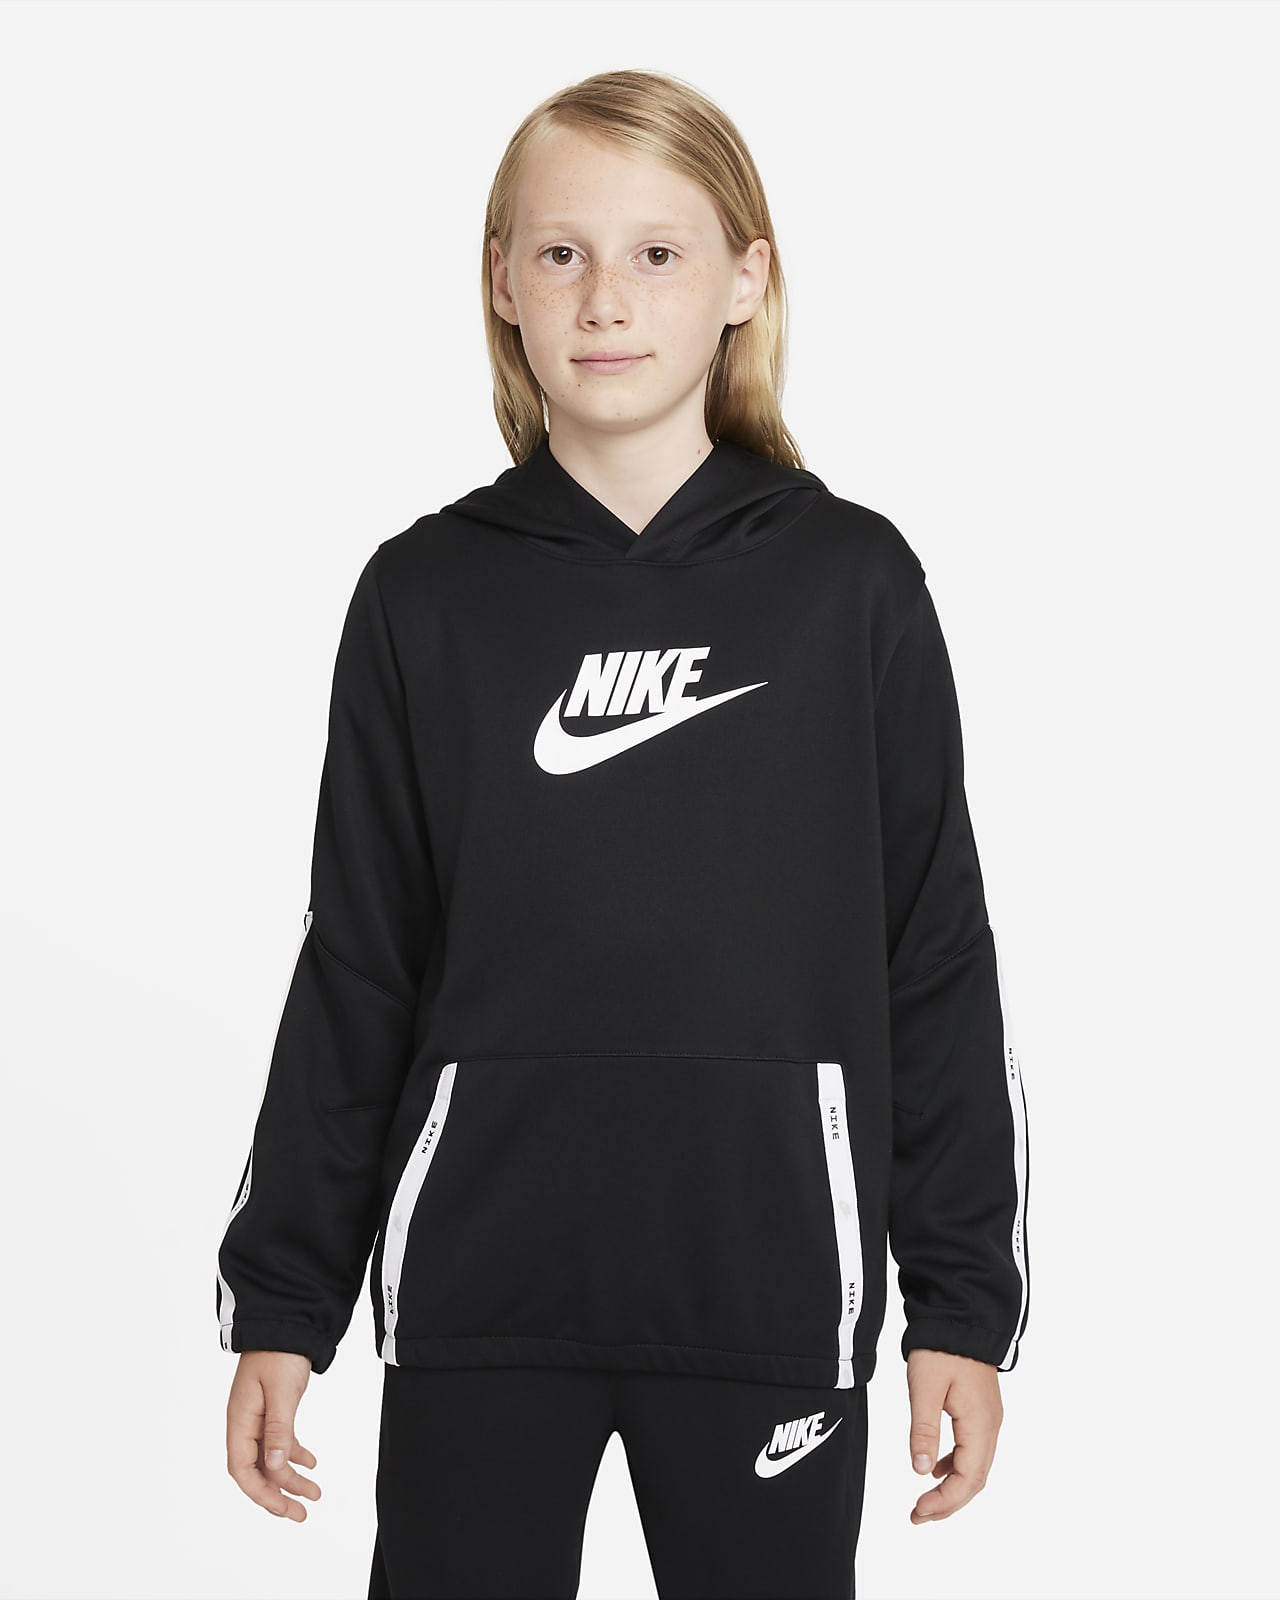 pols vrek Politiek Nike Sportswear Trainingspak voor kids. Nike BE